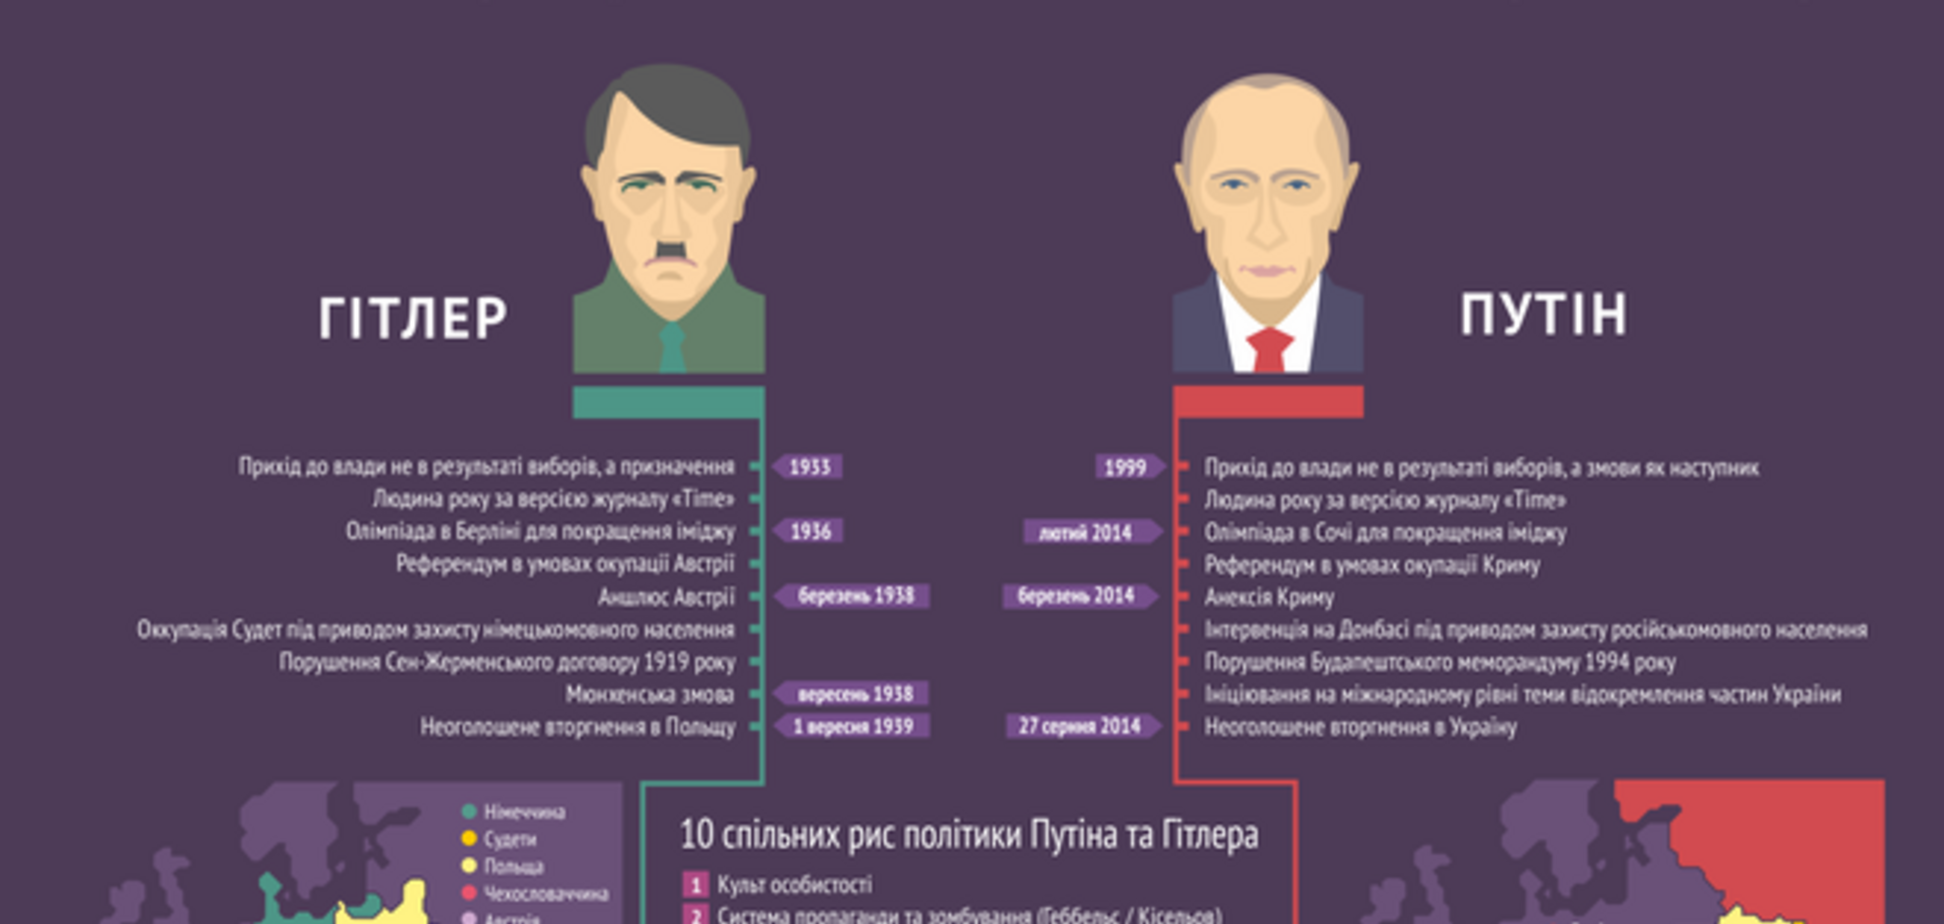 Путин пошел по стопам Гитлера. Инфографика